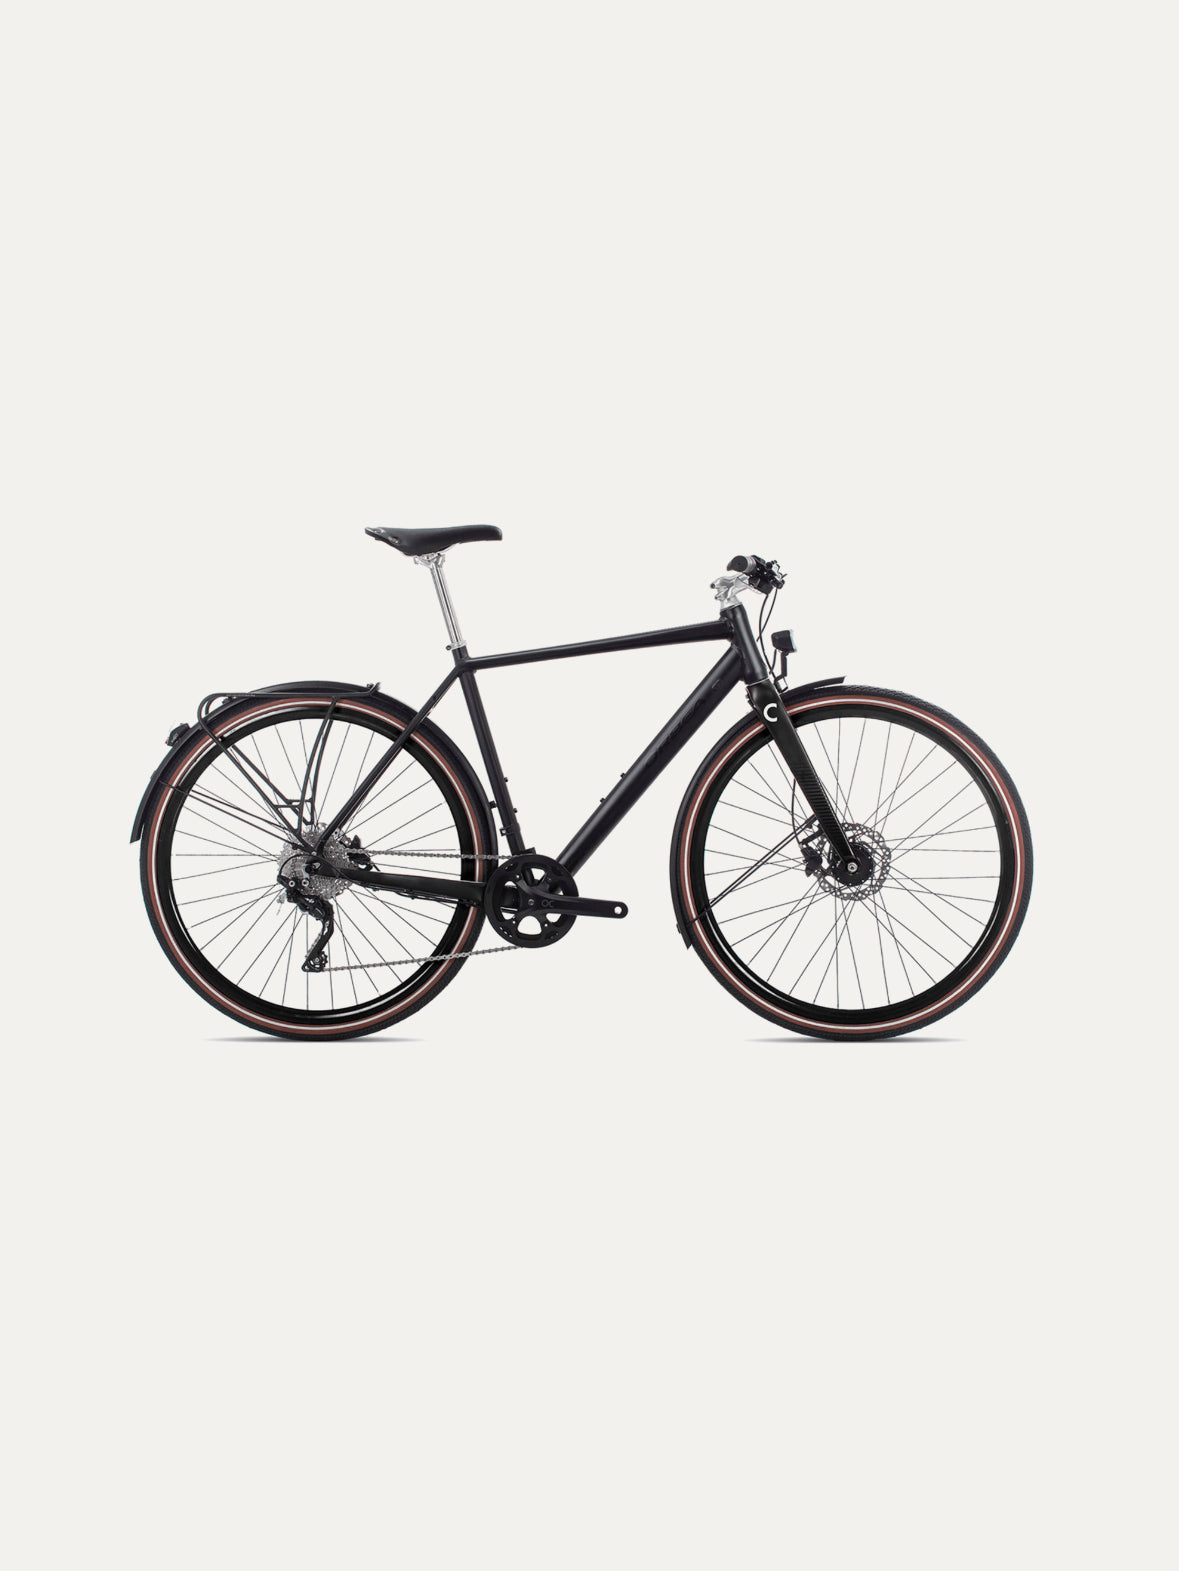 Orbea Carpe 10 | Lightweight Urban Bike | City Cycling